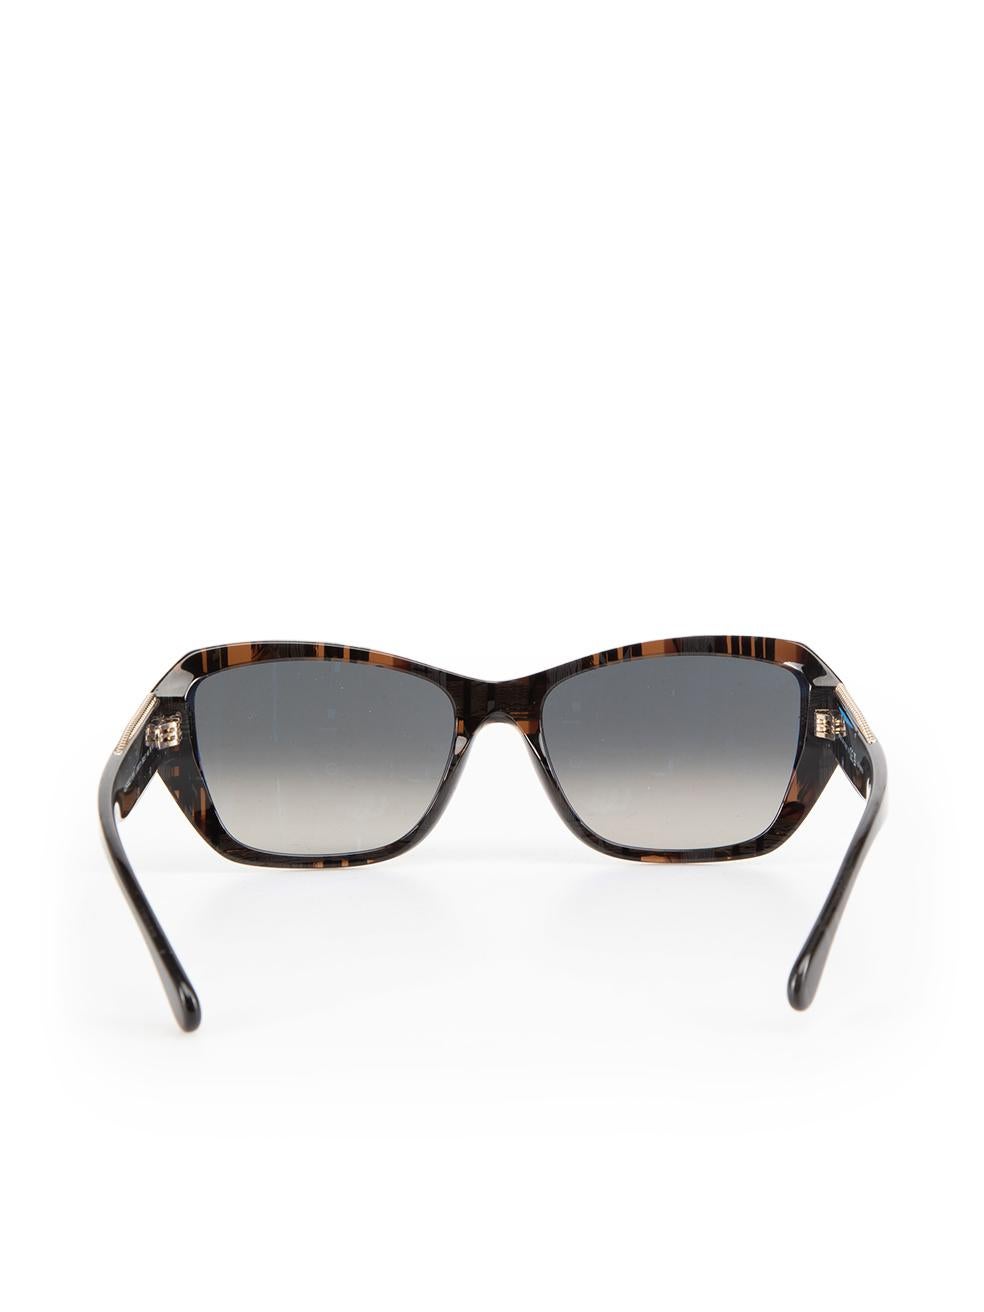 Women's Chanel Black Butterfly Grey Gradient Sunglasses For Sale